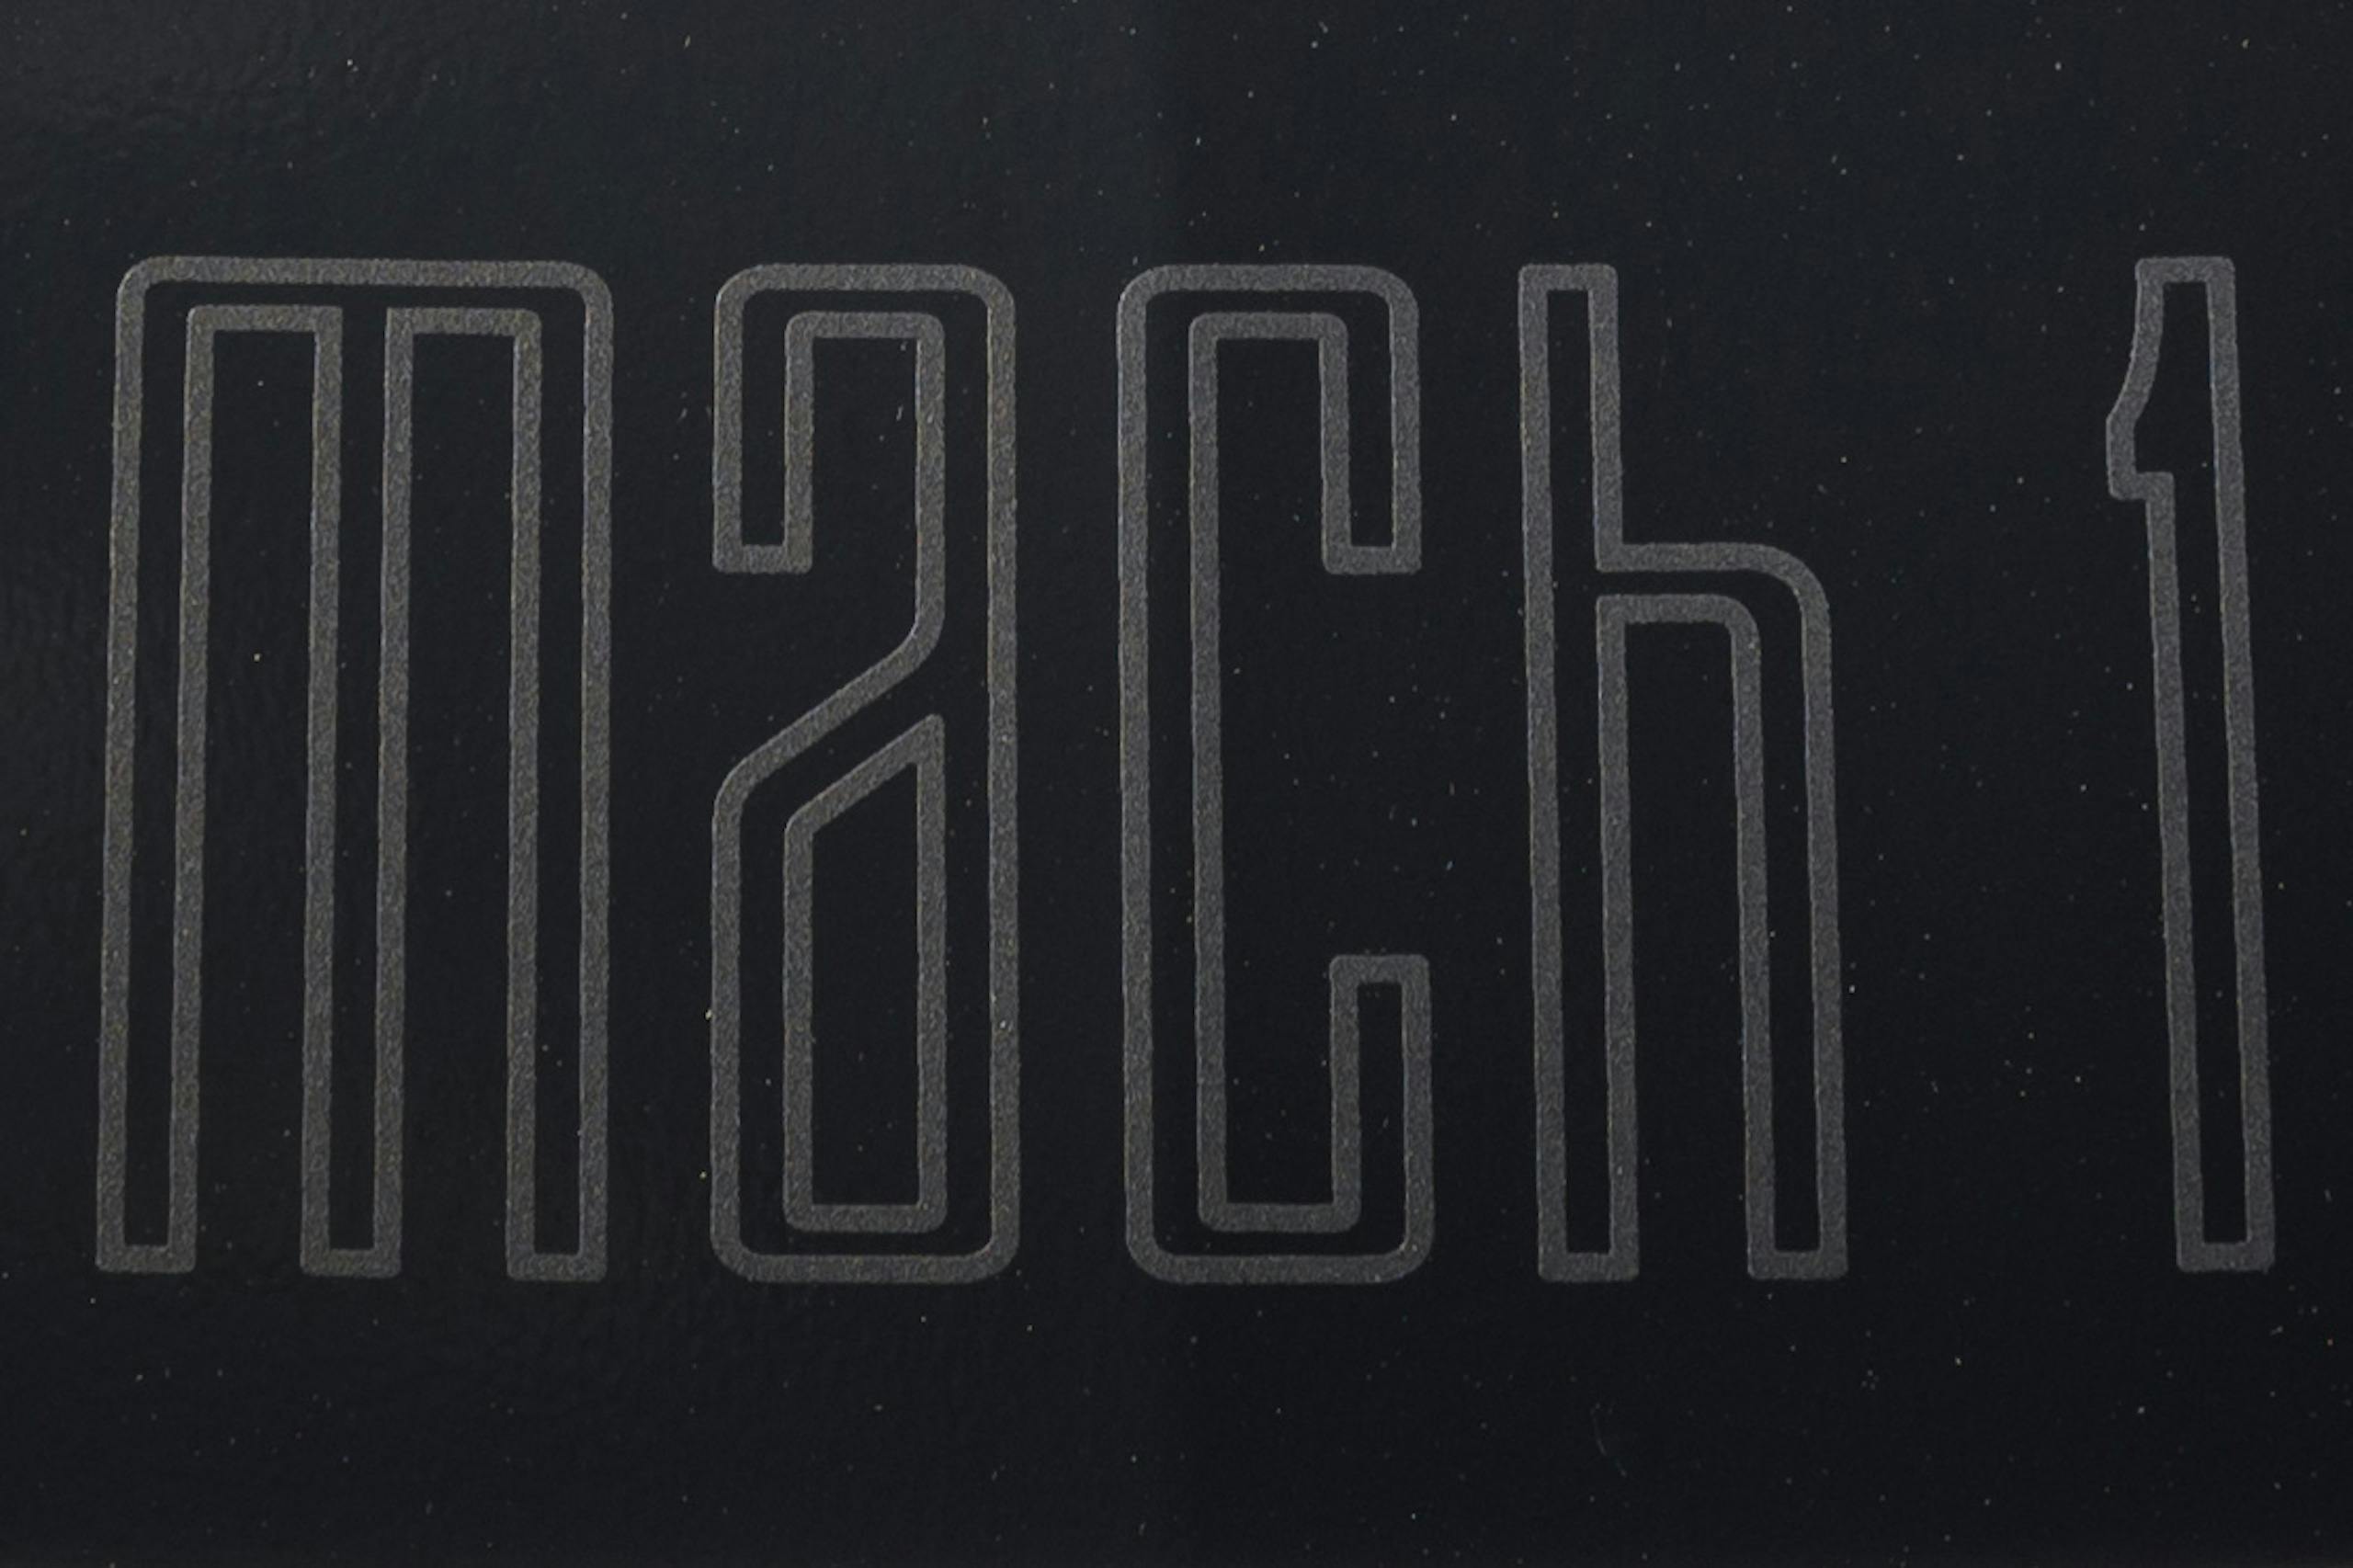 2021 Mustang Mach 1 emblem close